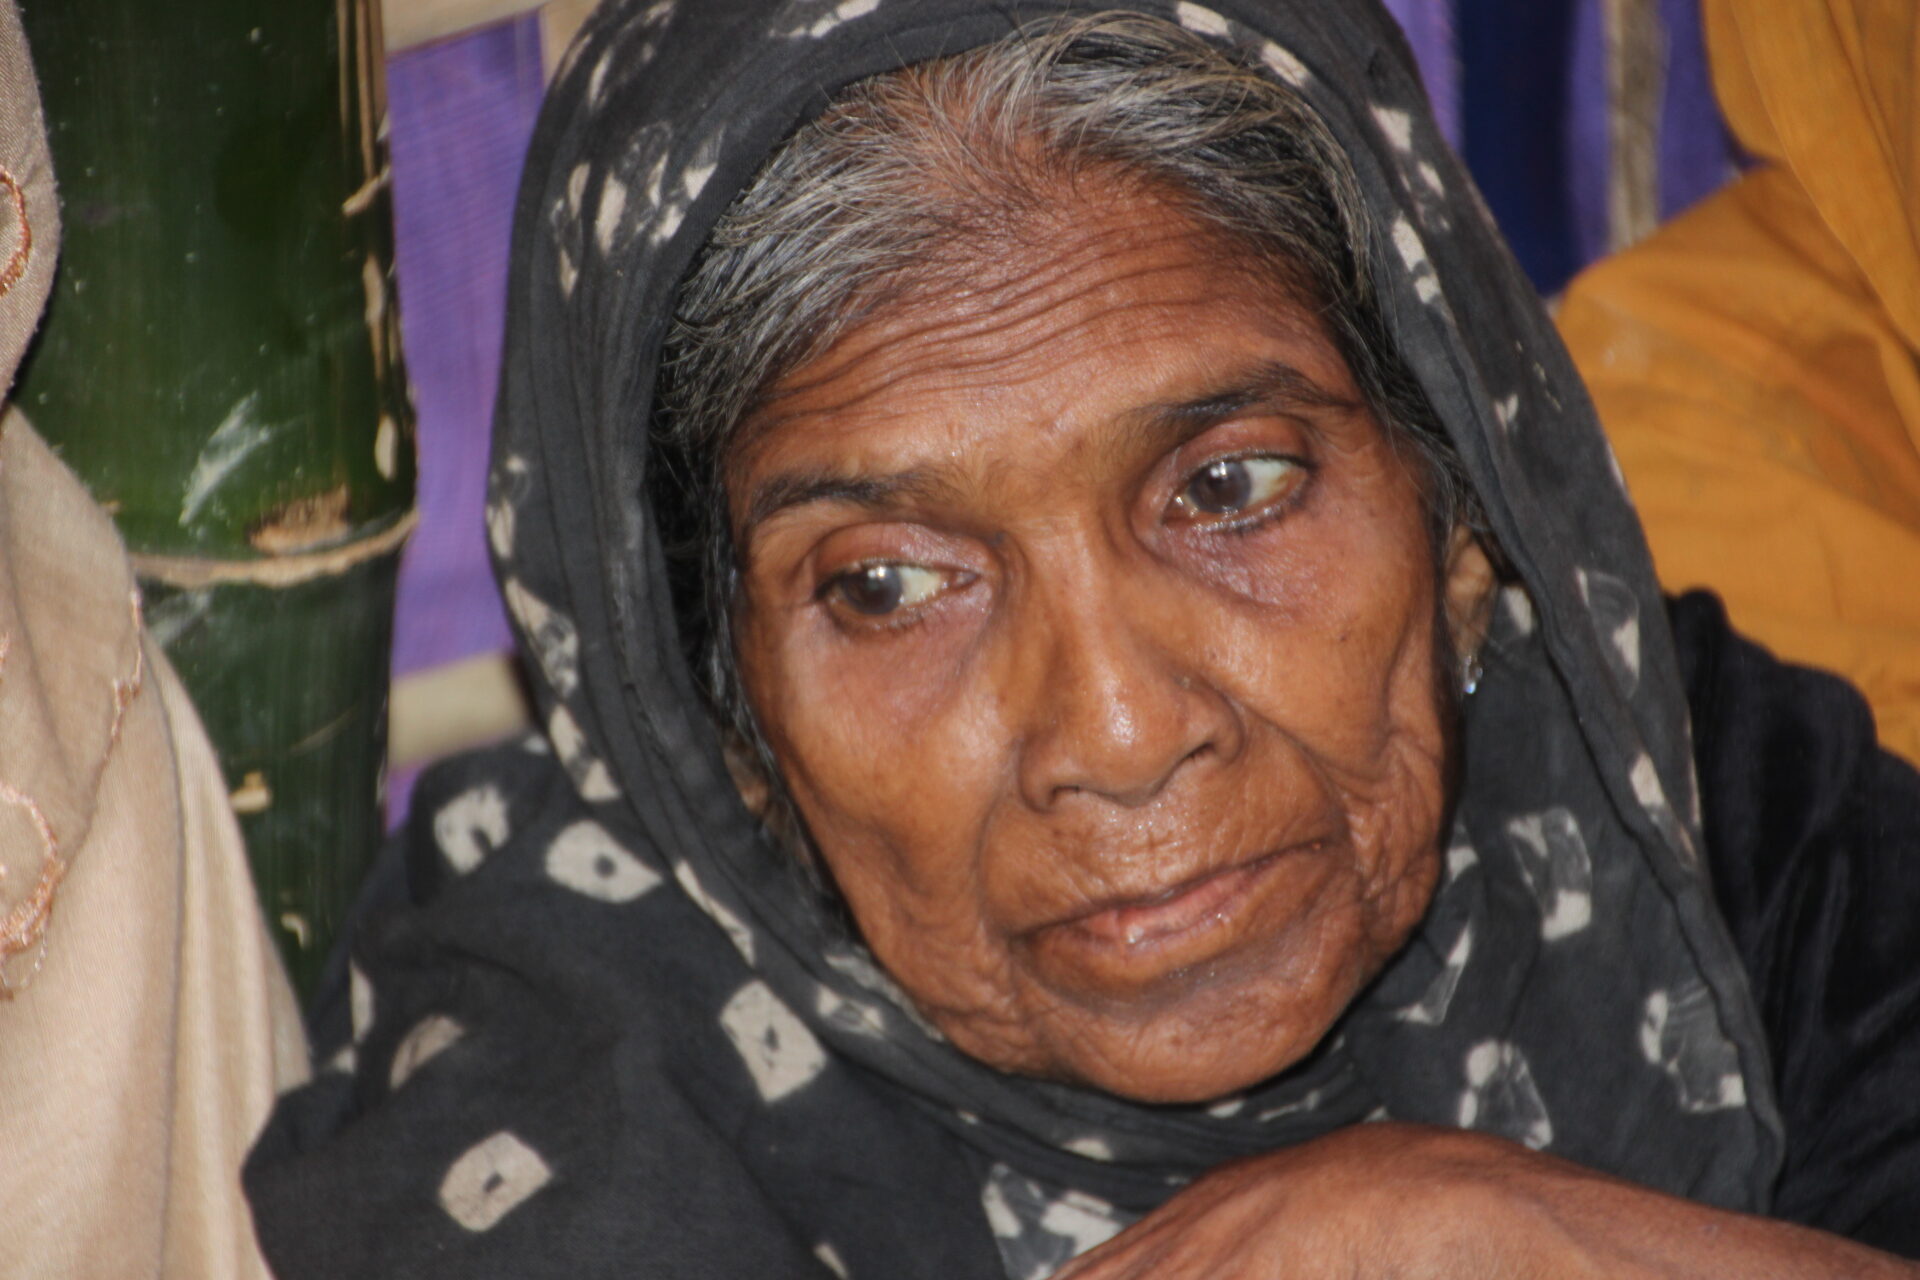 An older Rohingya woman in a headscarf looks down.